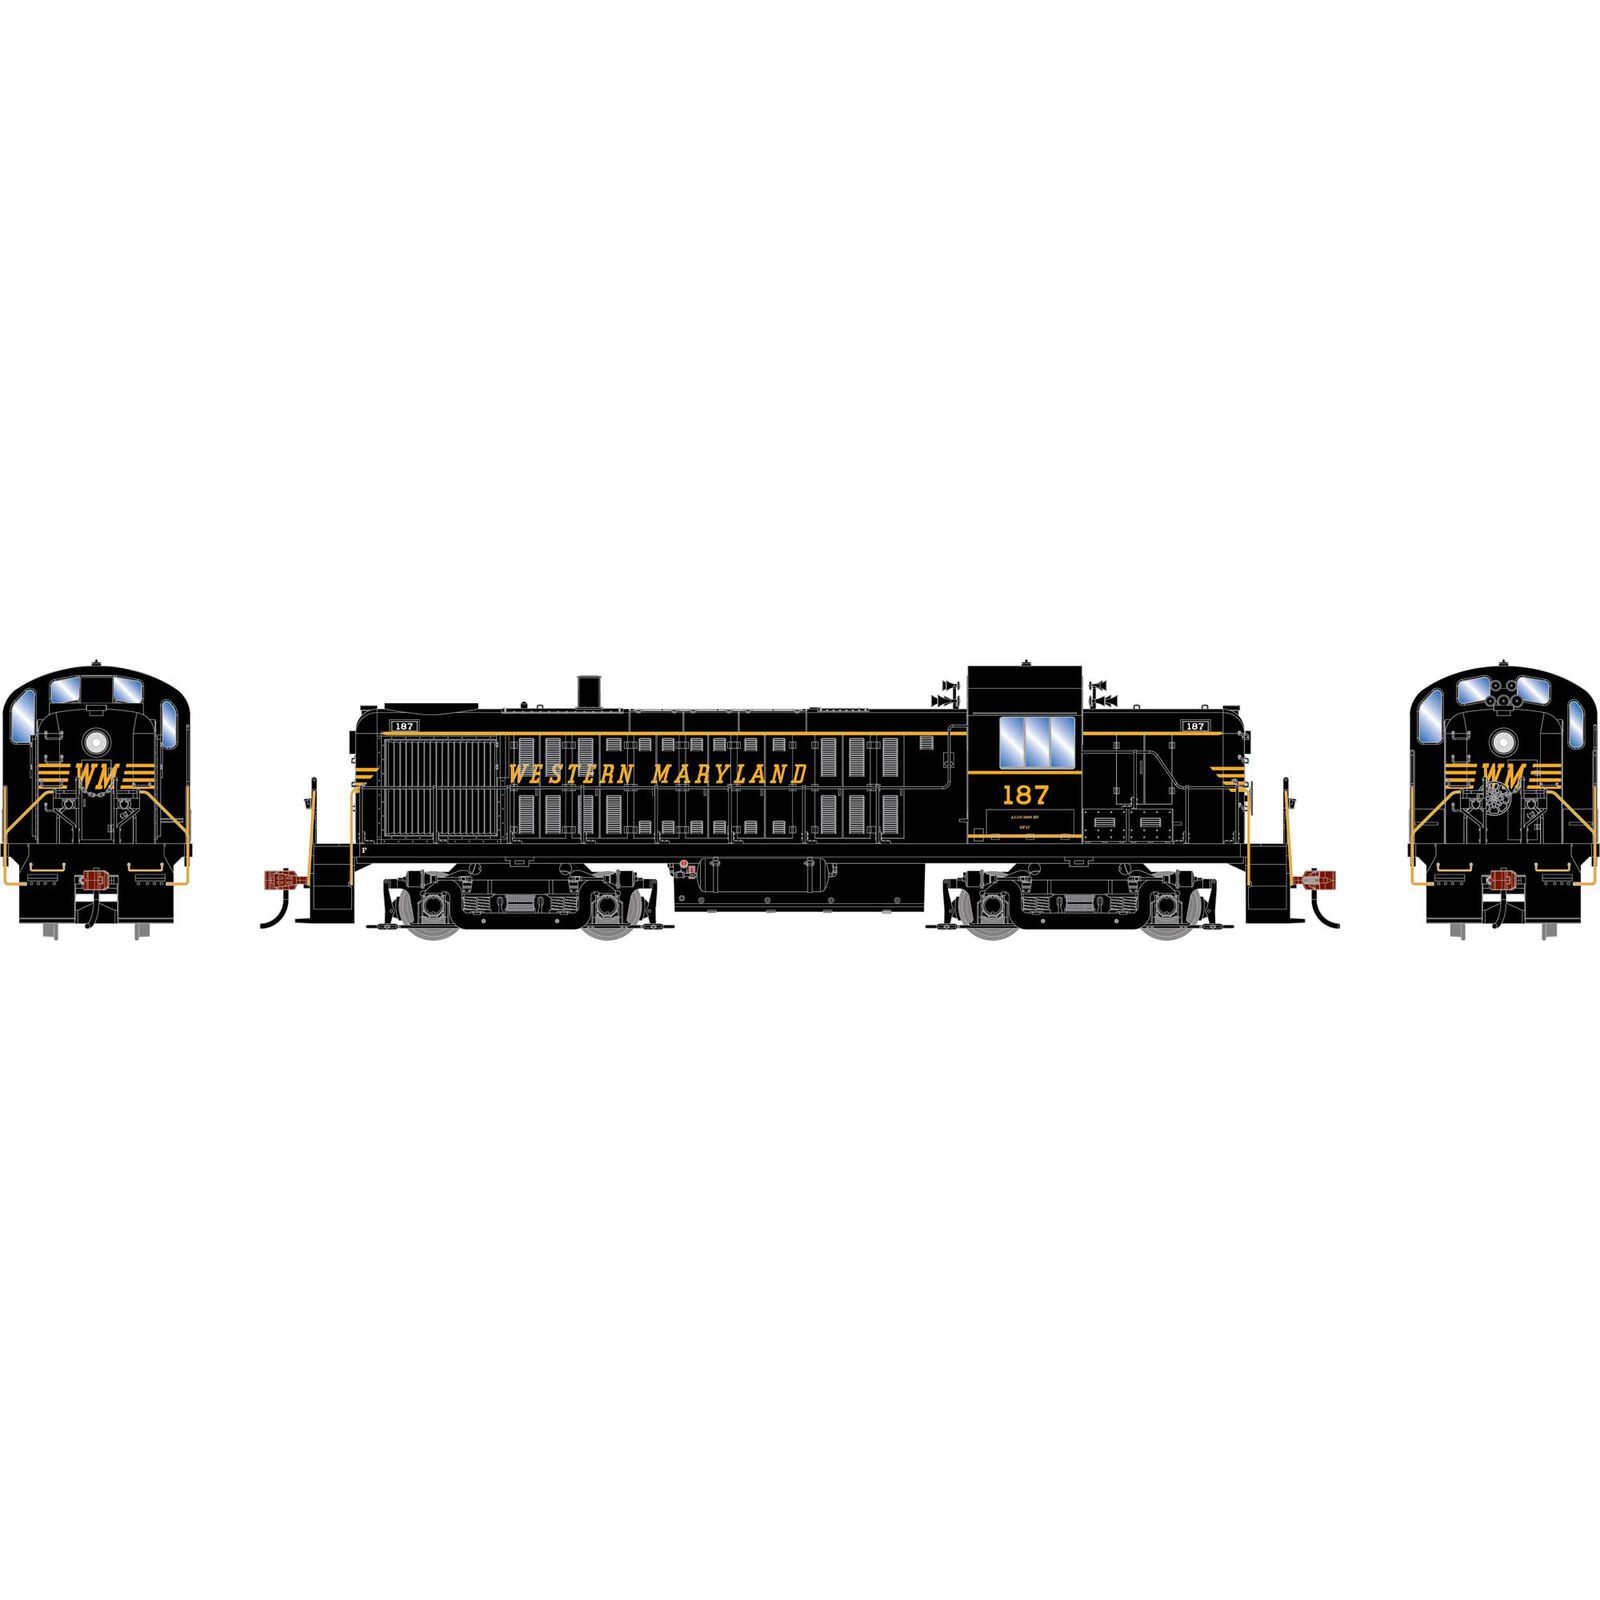 HO RS-3 Locomotive with DCC & Sound, WM #187